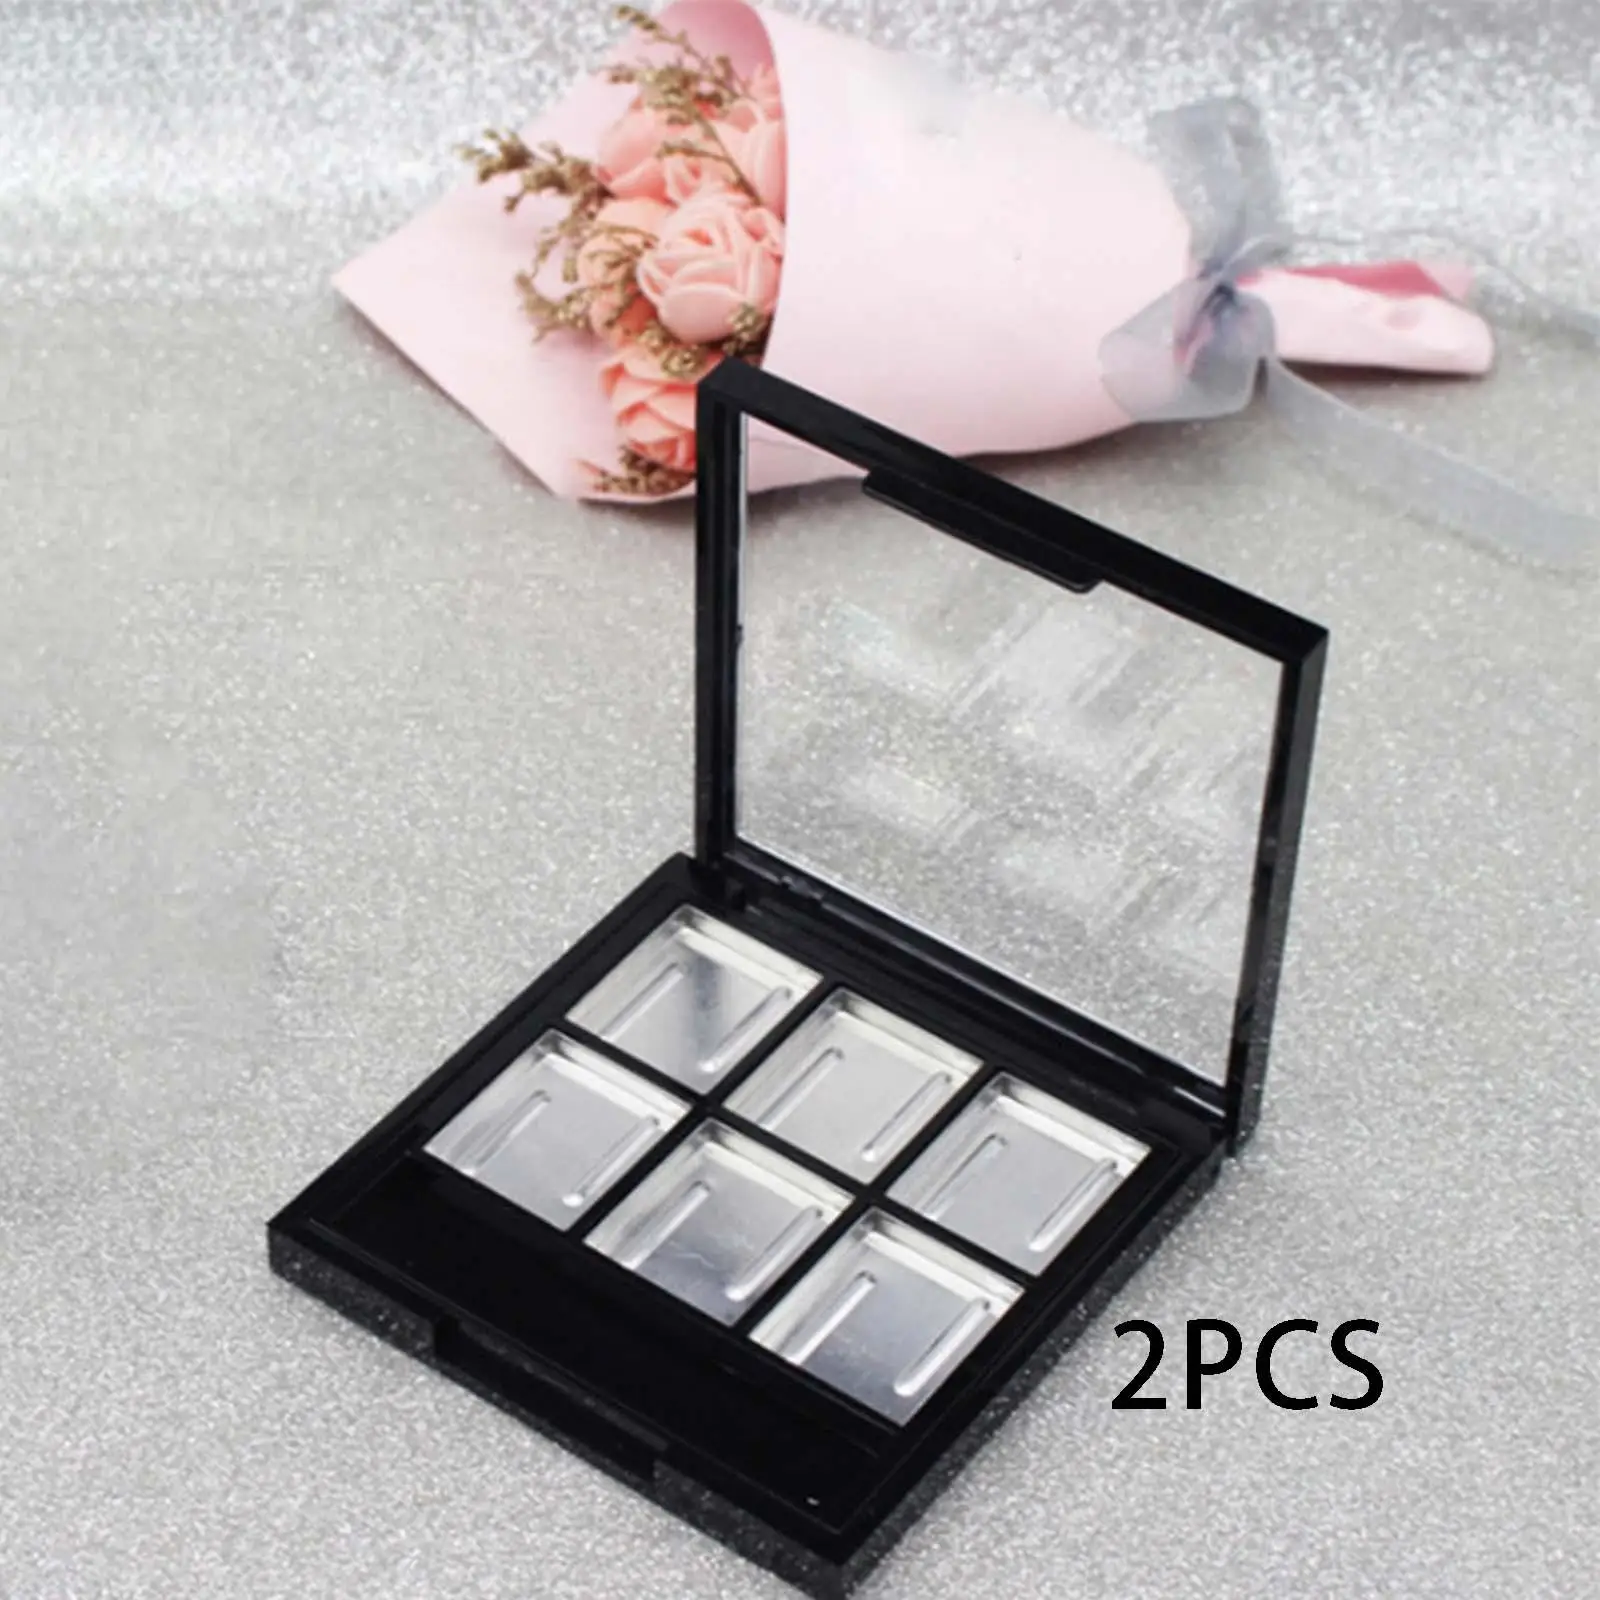 2 Pieces 6 Grid Empty Eyeshadow Box Makeup Powder Sample Box Pigment Palette Tray Women Girls